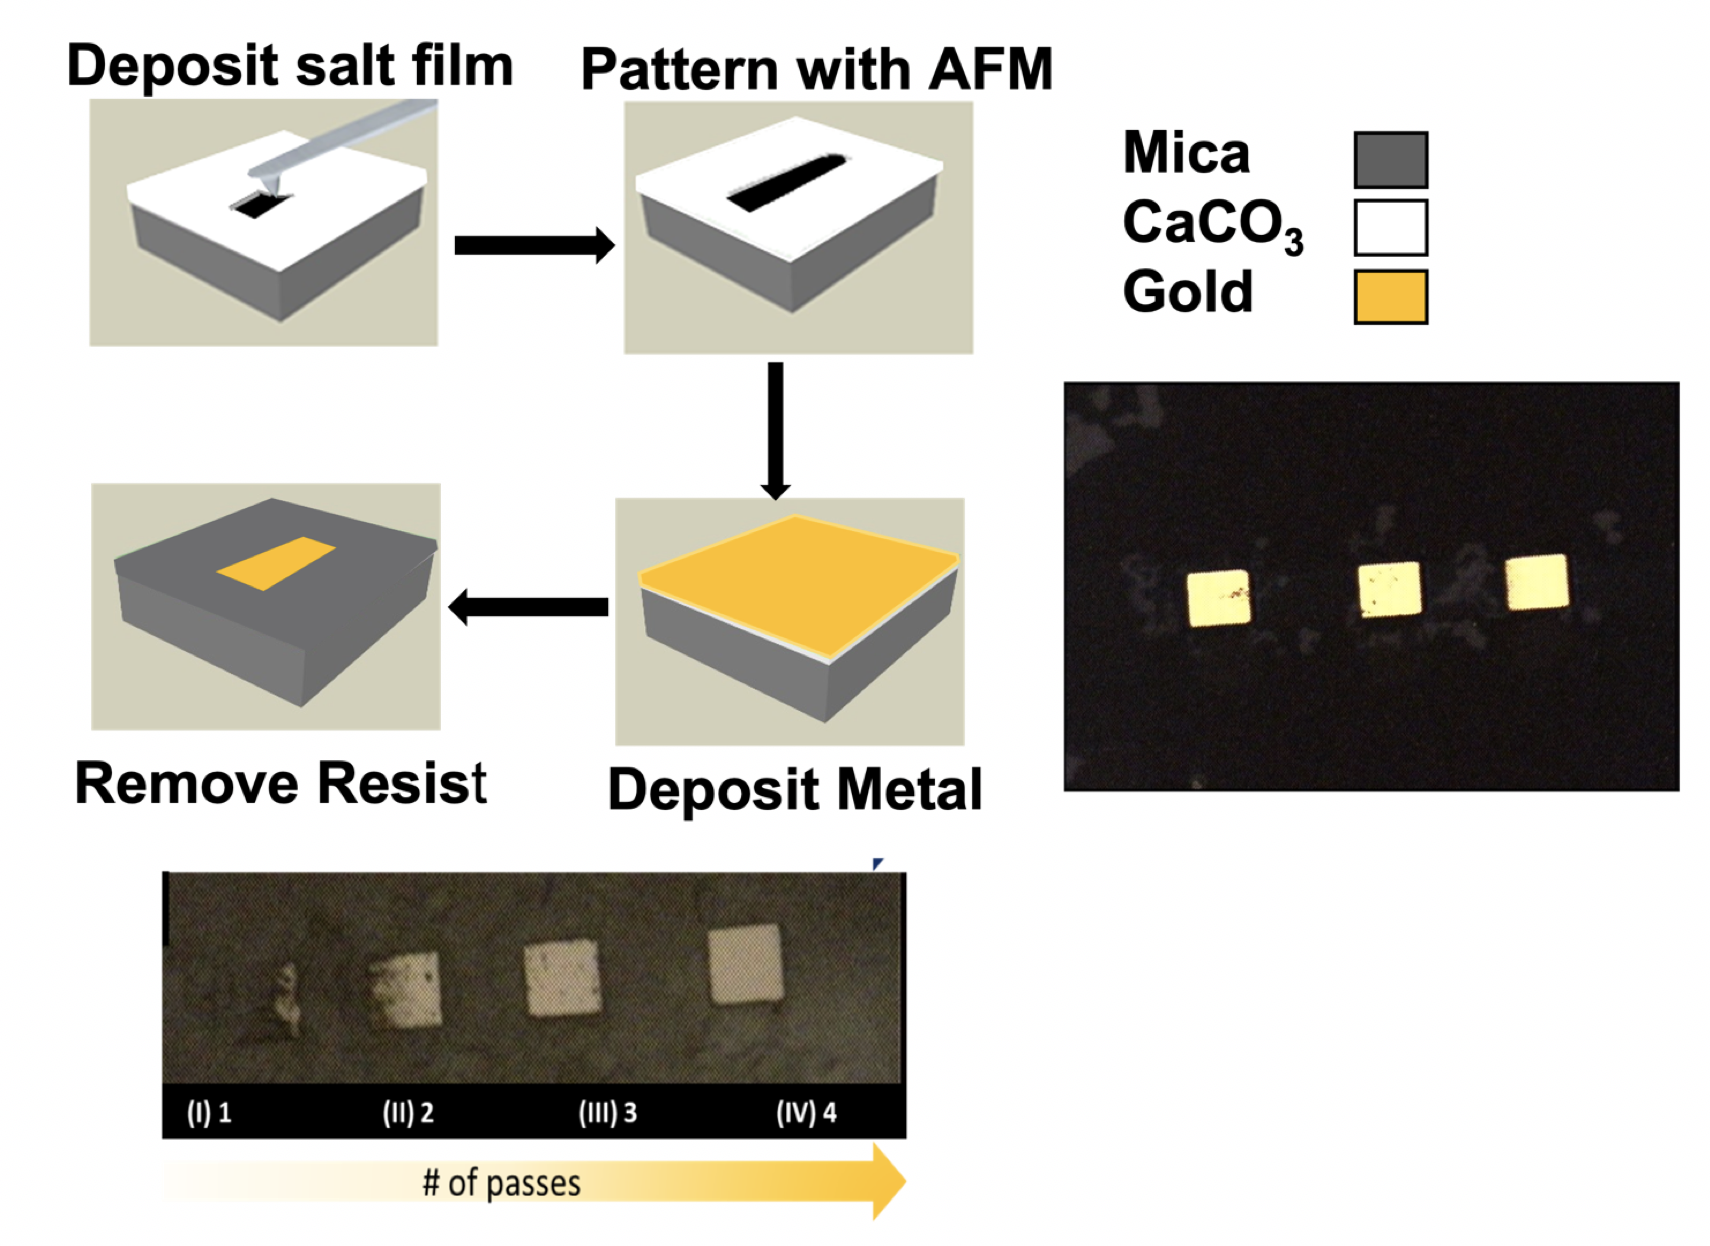 "Deposit Salt Film, Pattern with AFM, Mica CaCO3 Gold, Remove Resist, Deposit Metal"